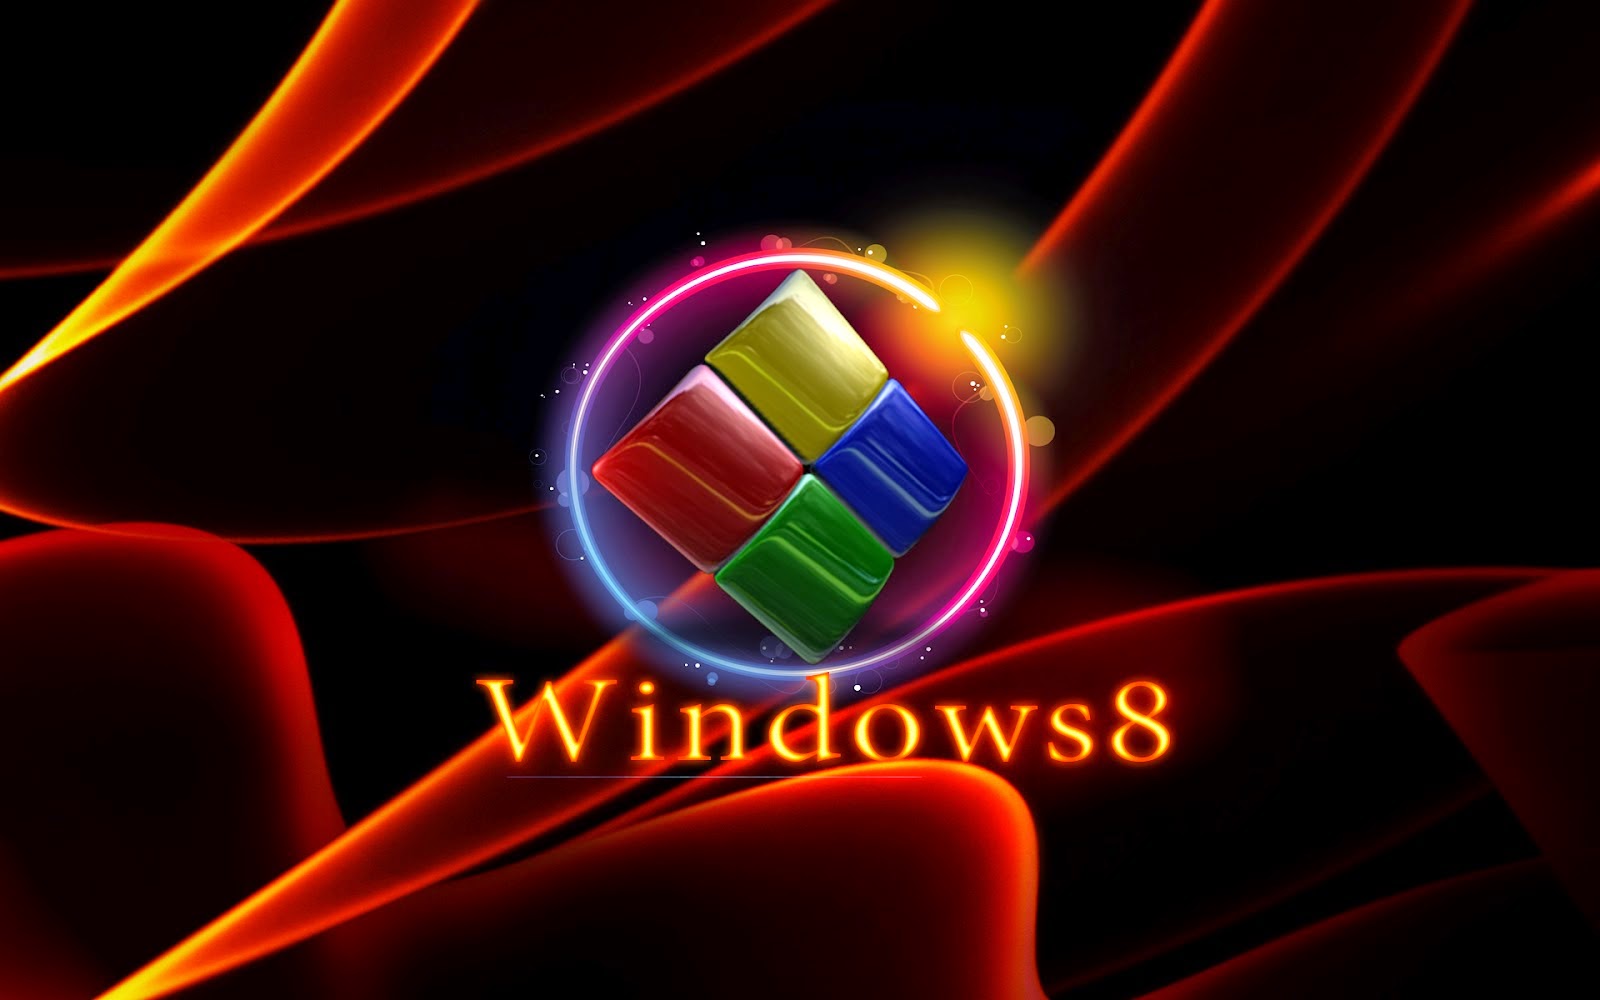 Windows 8 HD desktop wallpaper Free Download For PC